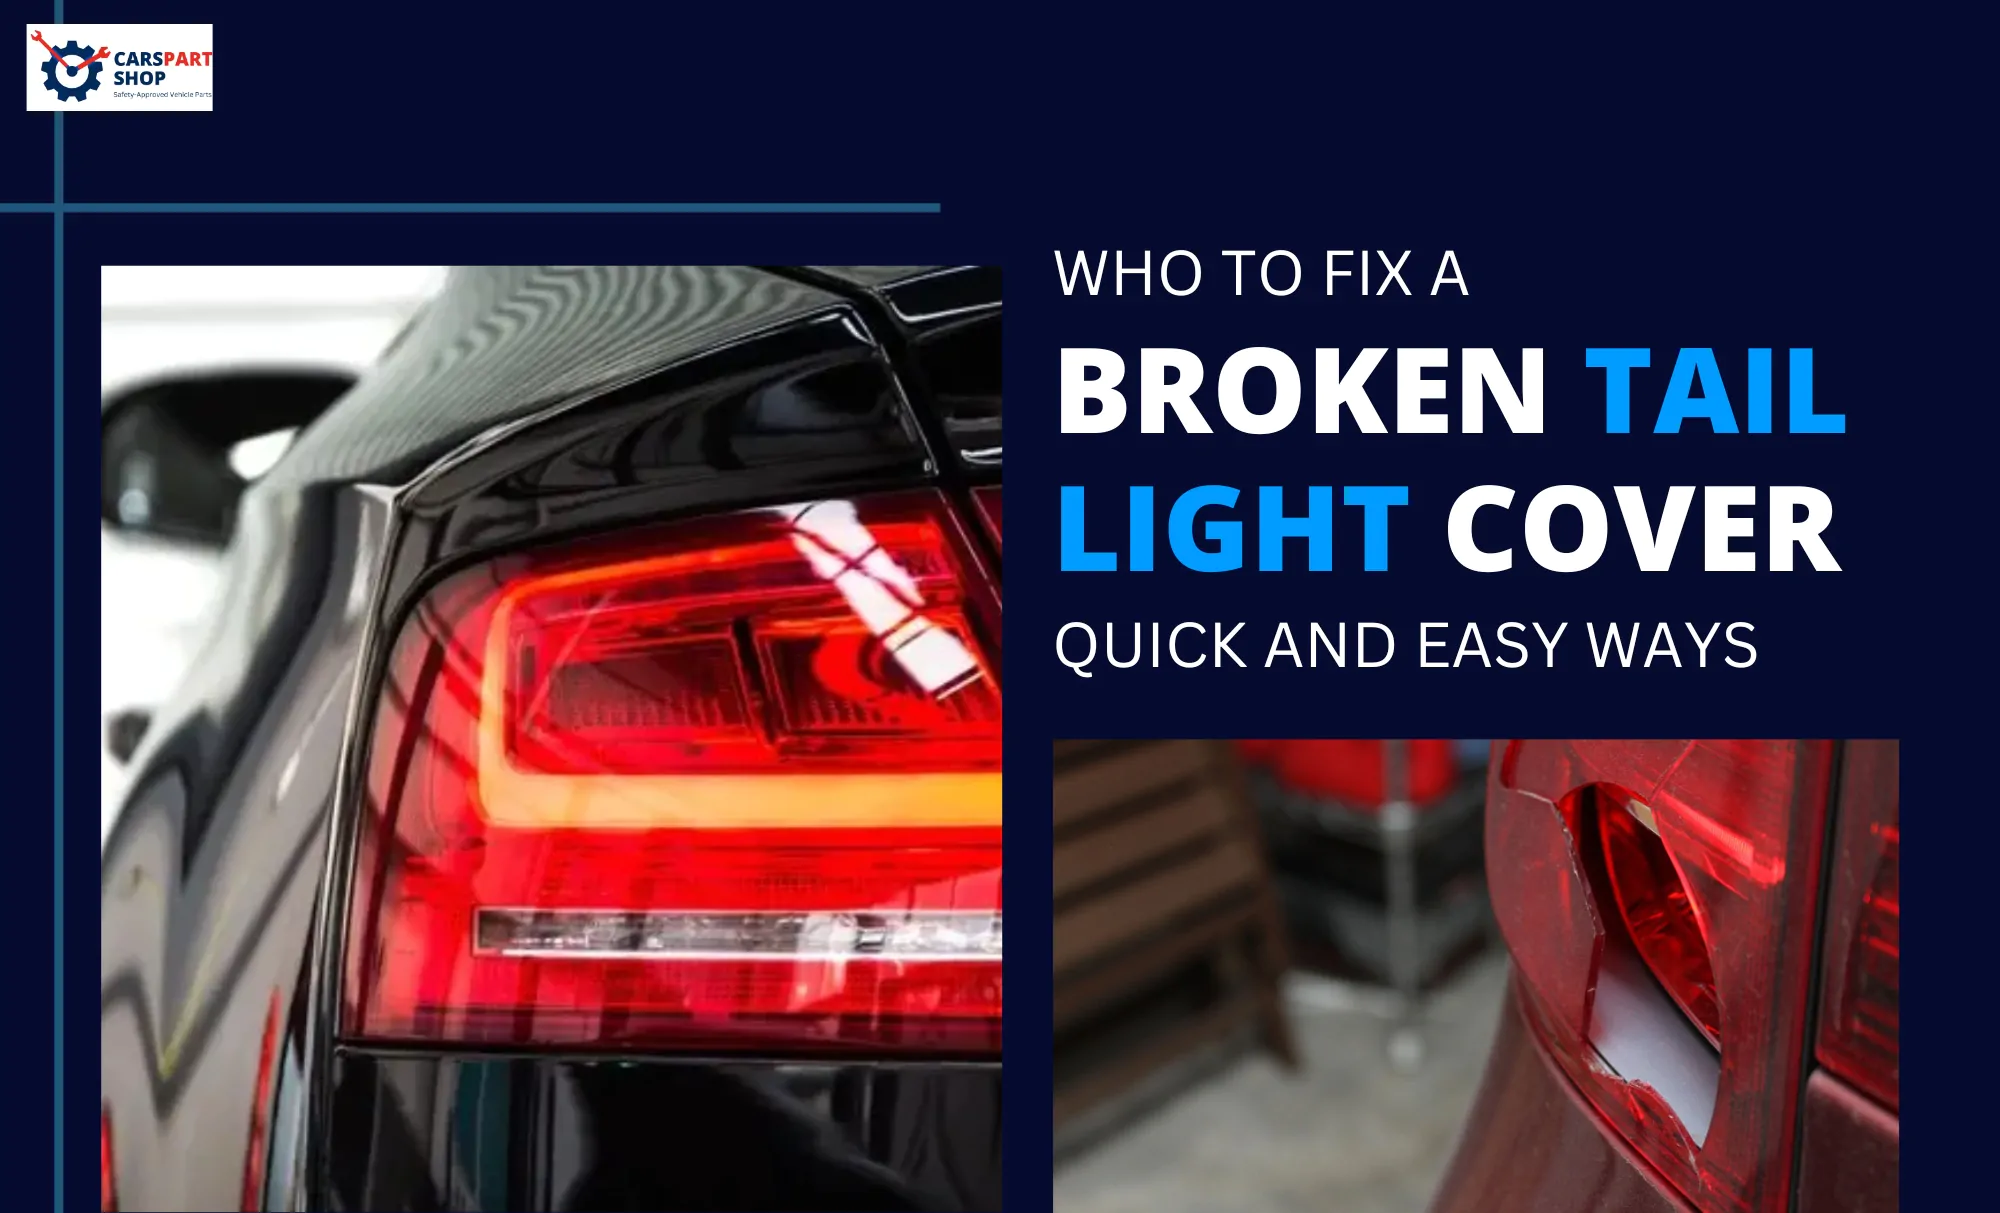 How To Fix A Broken Tail Light Cover? - 3 Best Ways